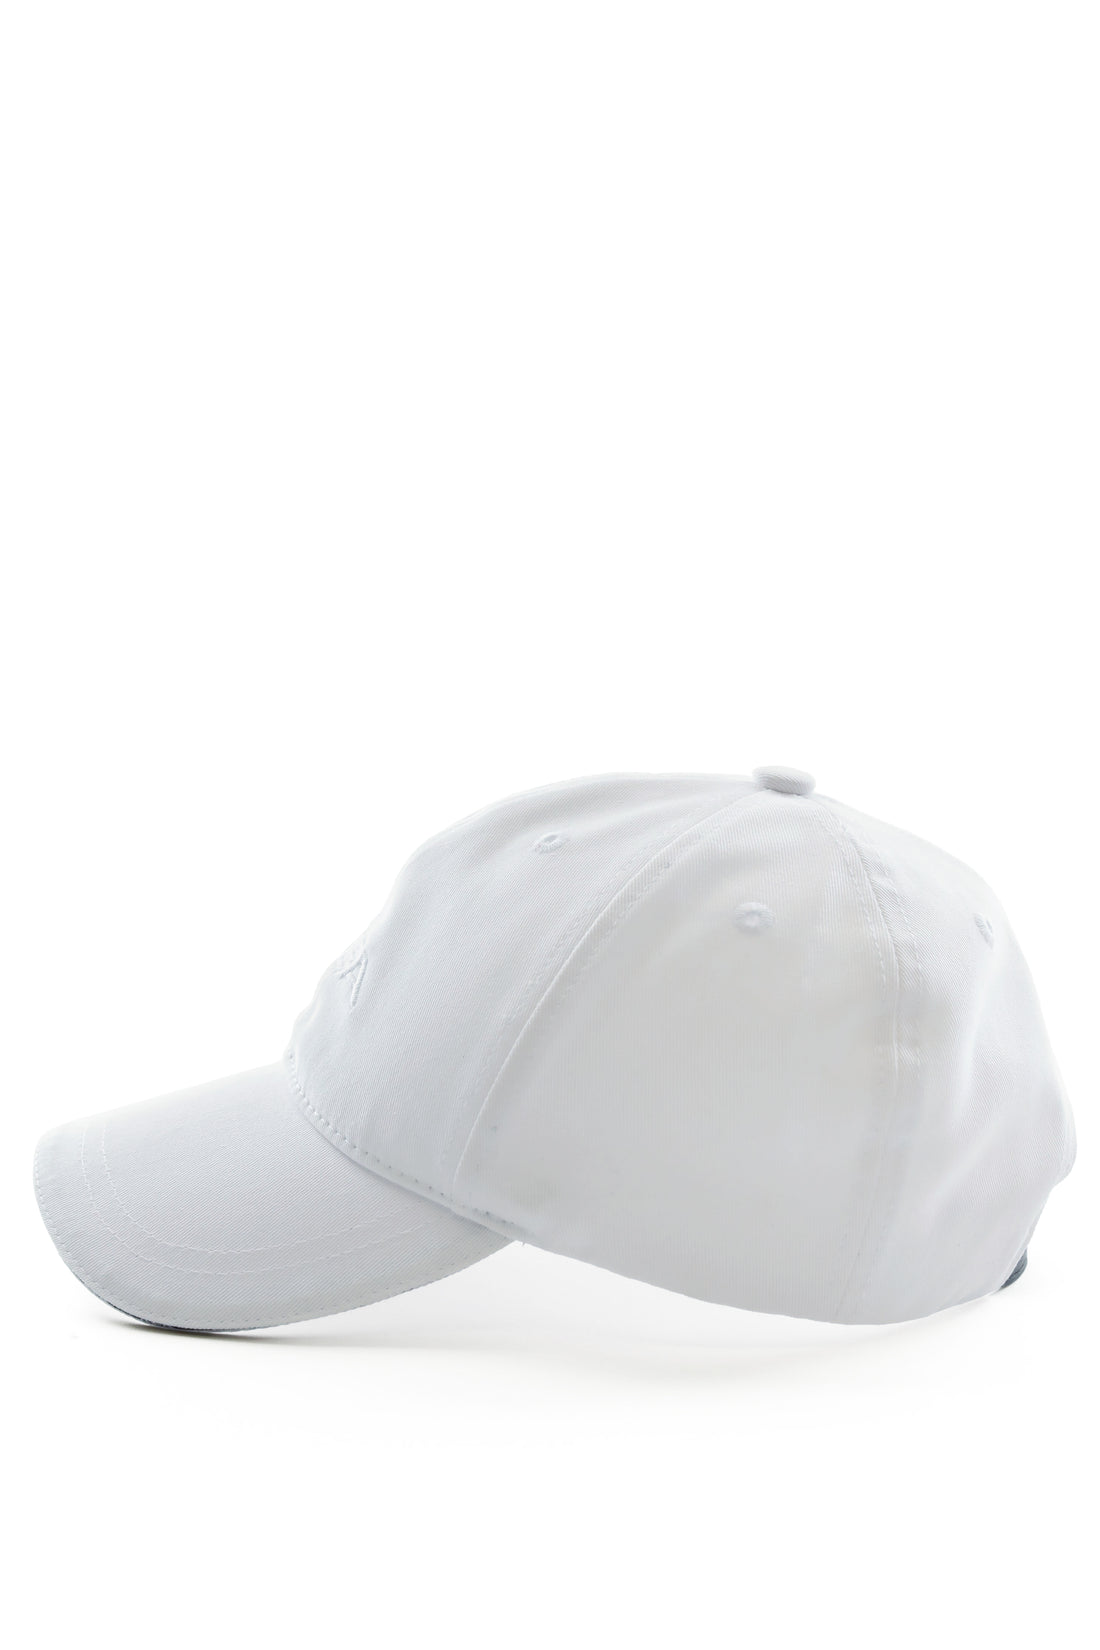 AIEA Golf black and white strapback hat